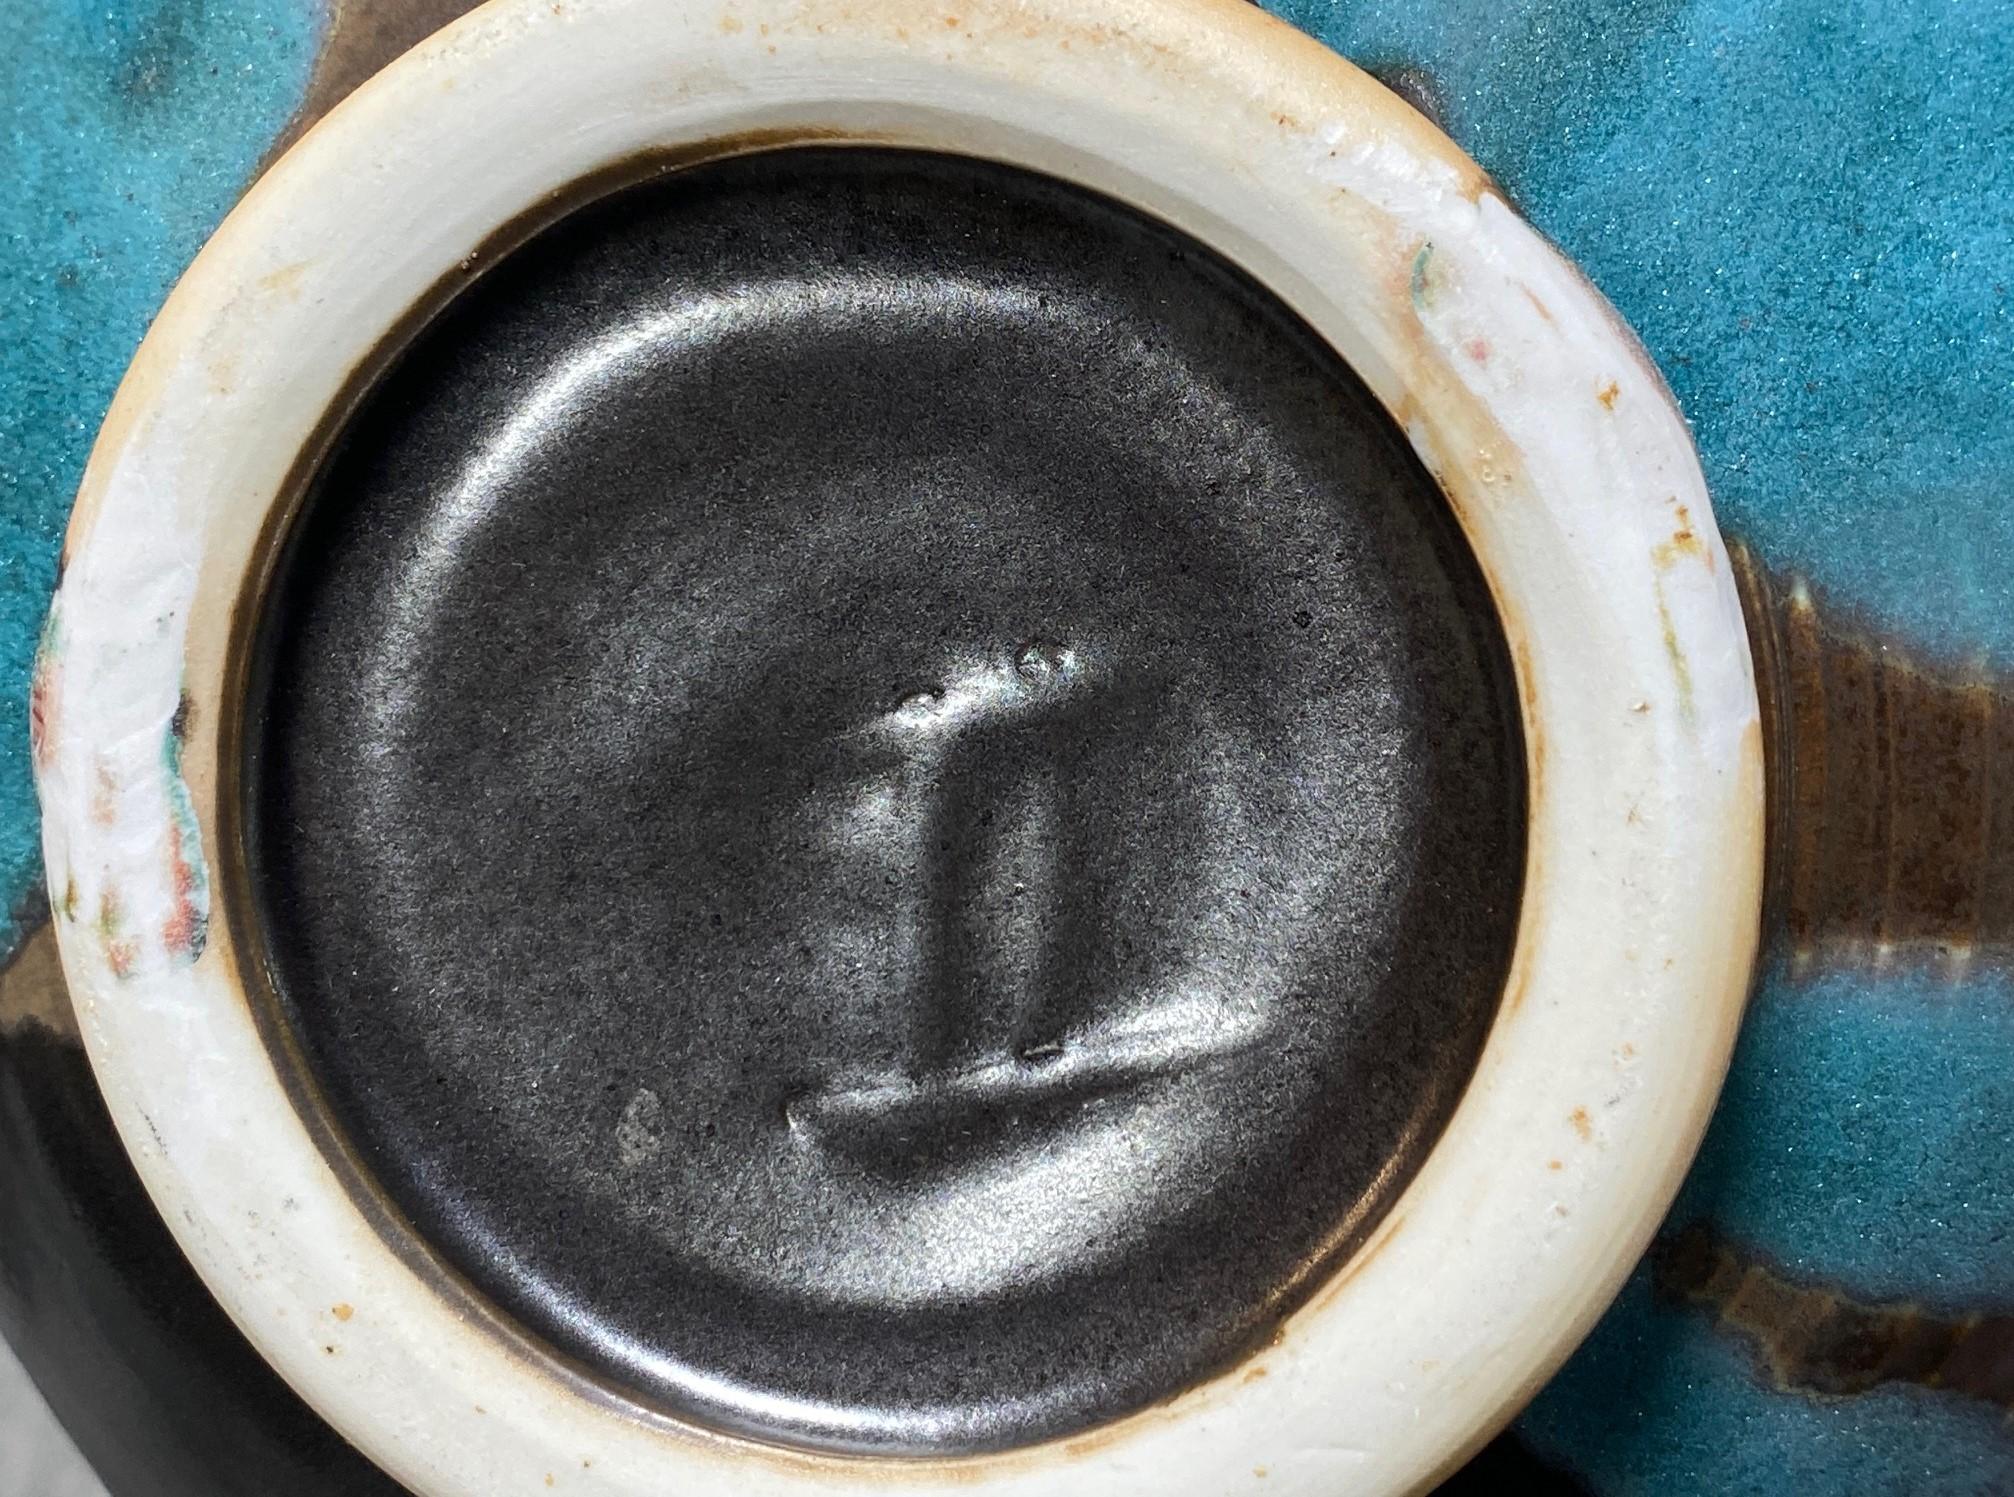 Tashiko Tazaezu Signed Mid-Century Modern Japanese Hawaiian Studio Pottery Bowl For Sale 11